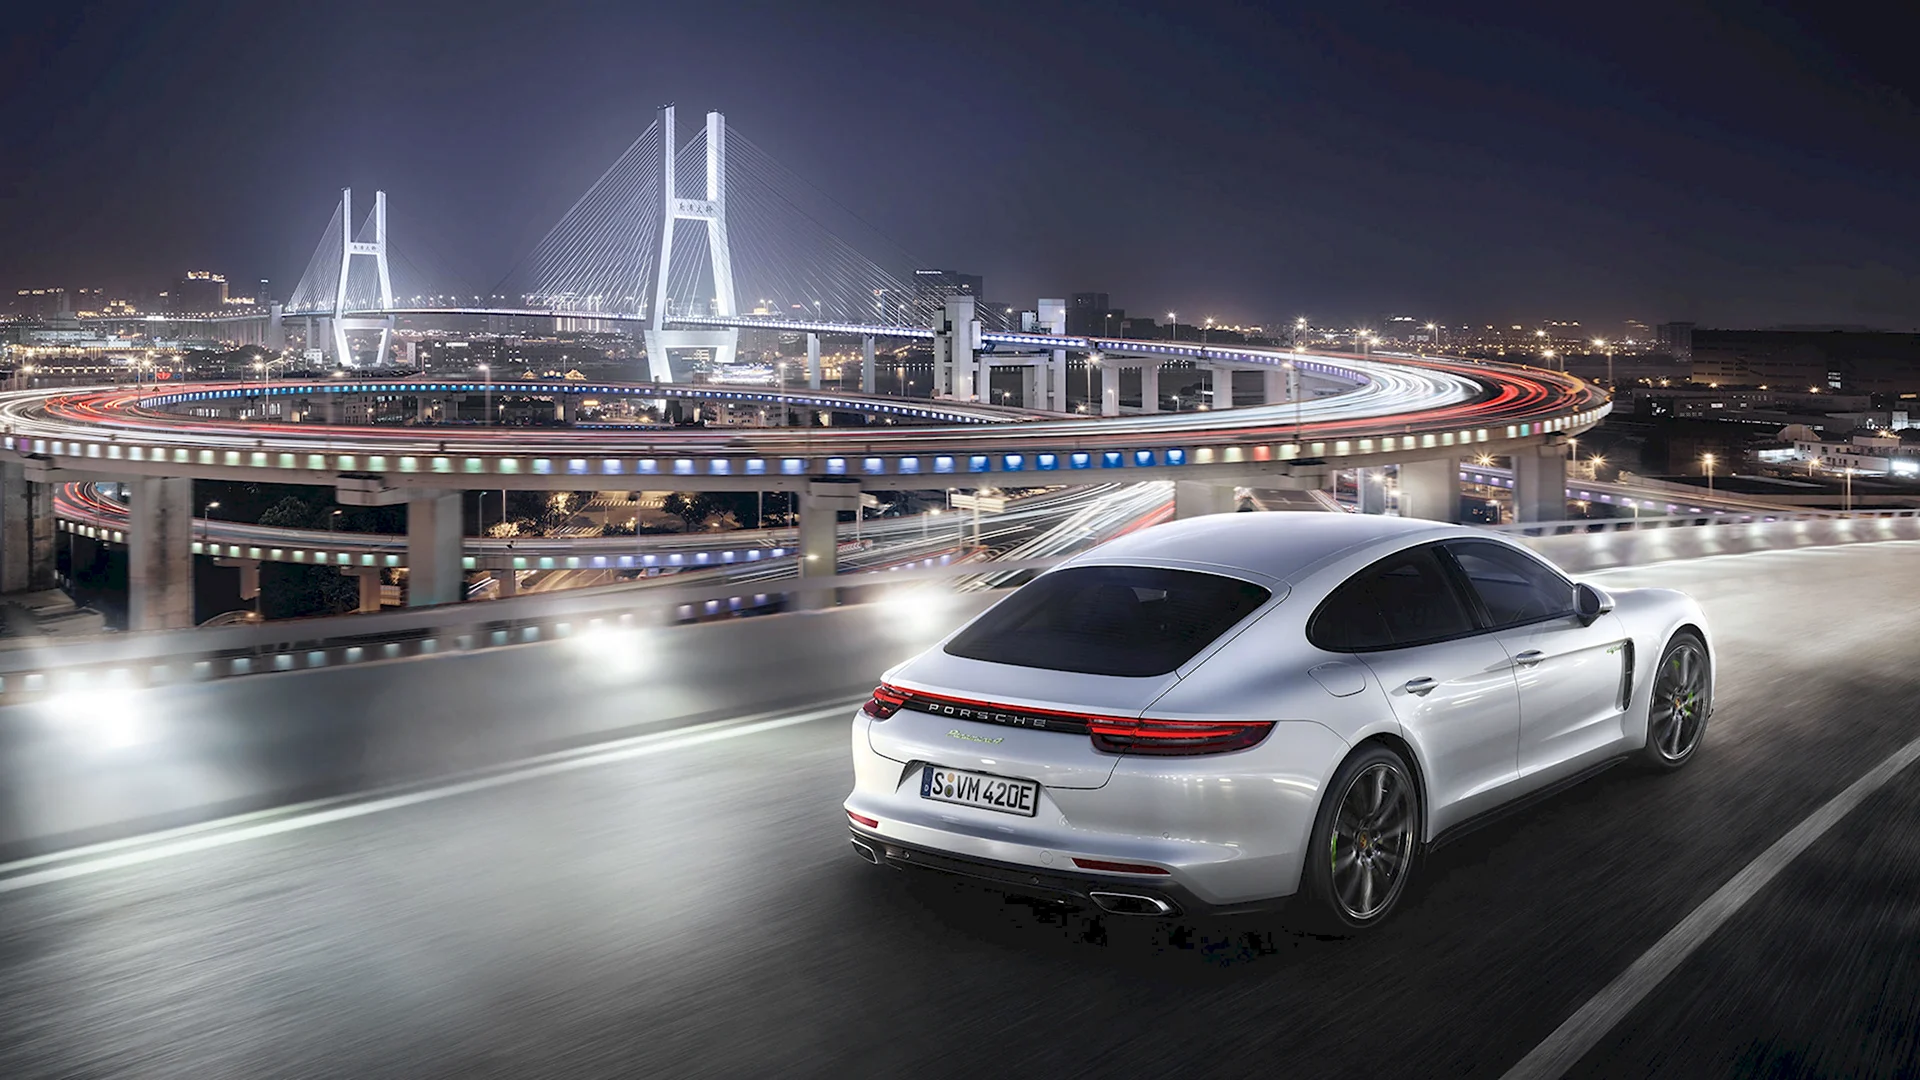 Porsche Panamera. 2020.Dubai